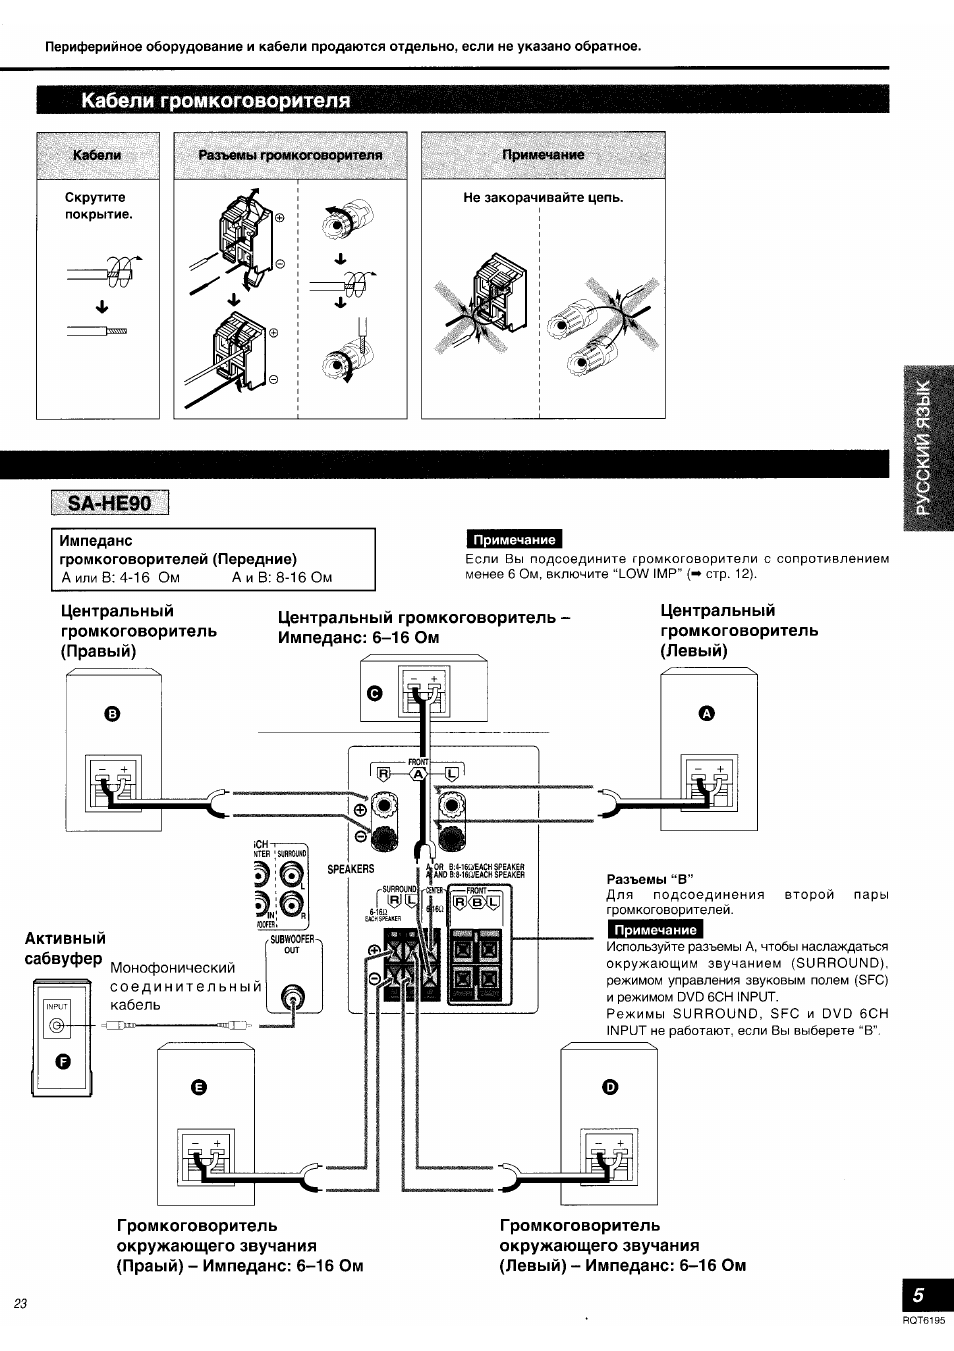 Кабели громкоговорителя, Sa-he90 | Инструкция по эксплуатации Panasonic SA-HE90 | Страница 5 / 19